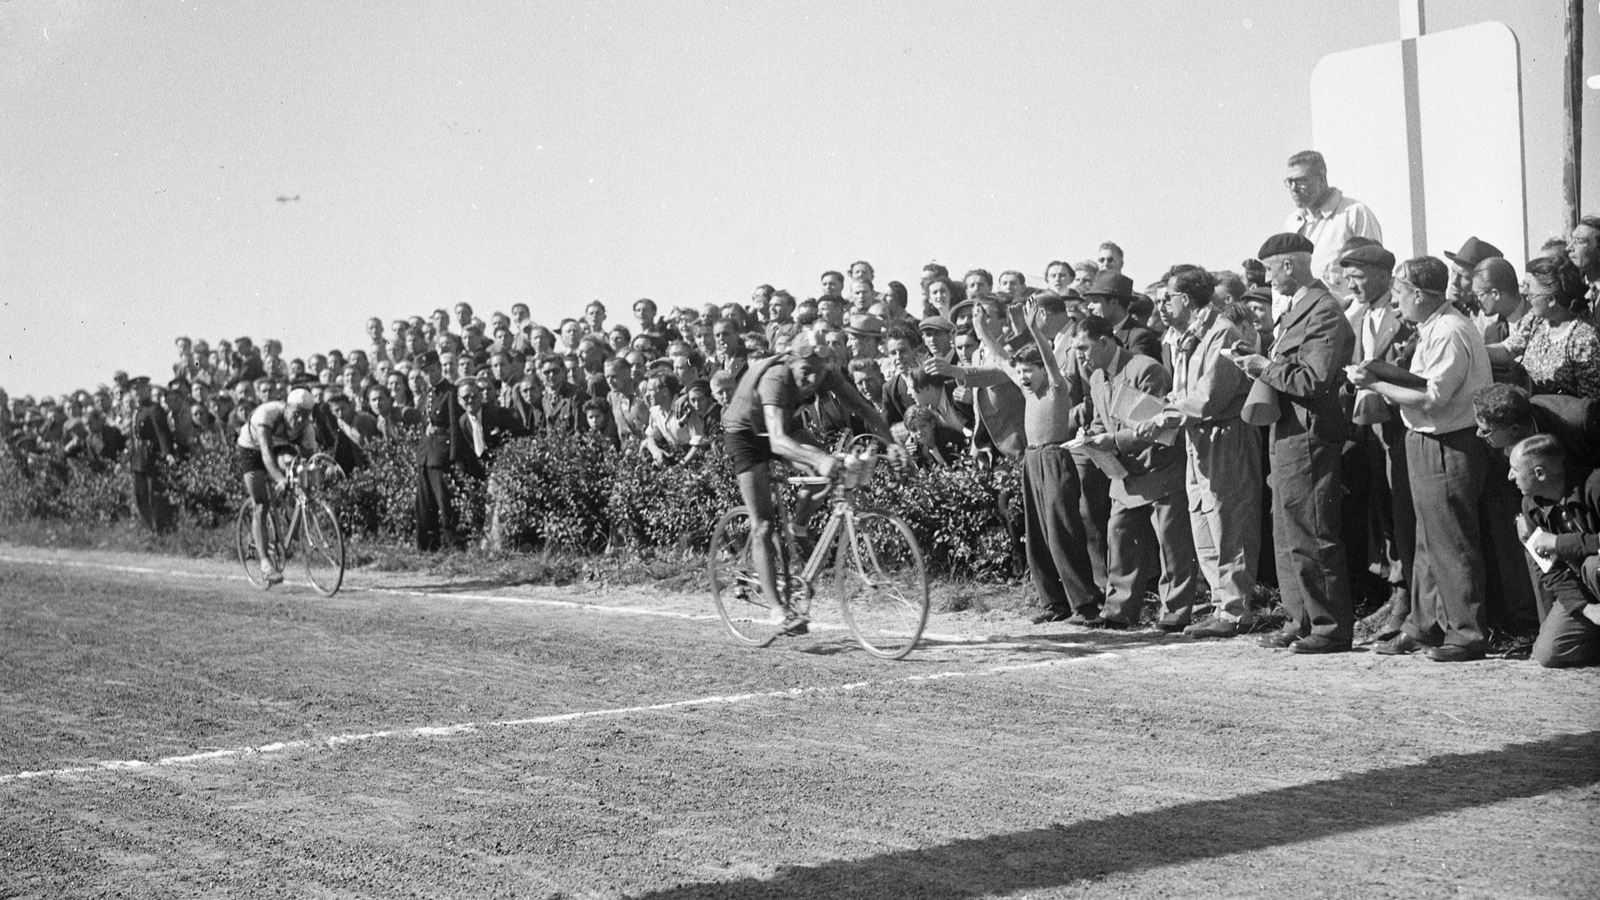 Swiss cyclist Ferdinand Kübler crosses the finish line at the Tour de France on 25th June 1947